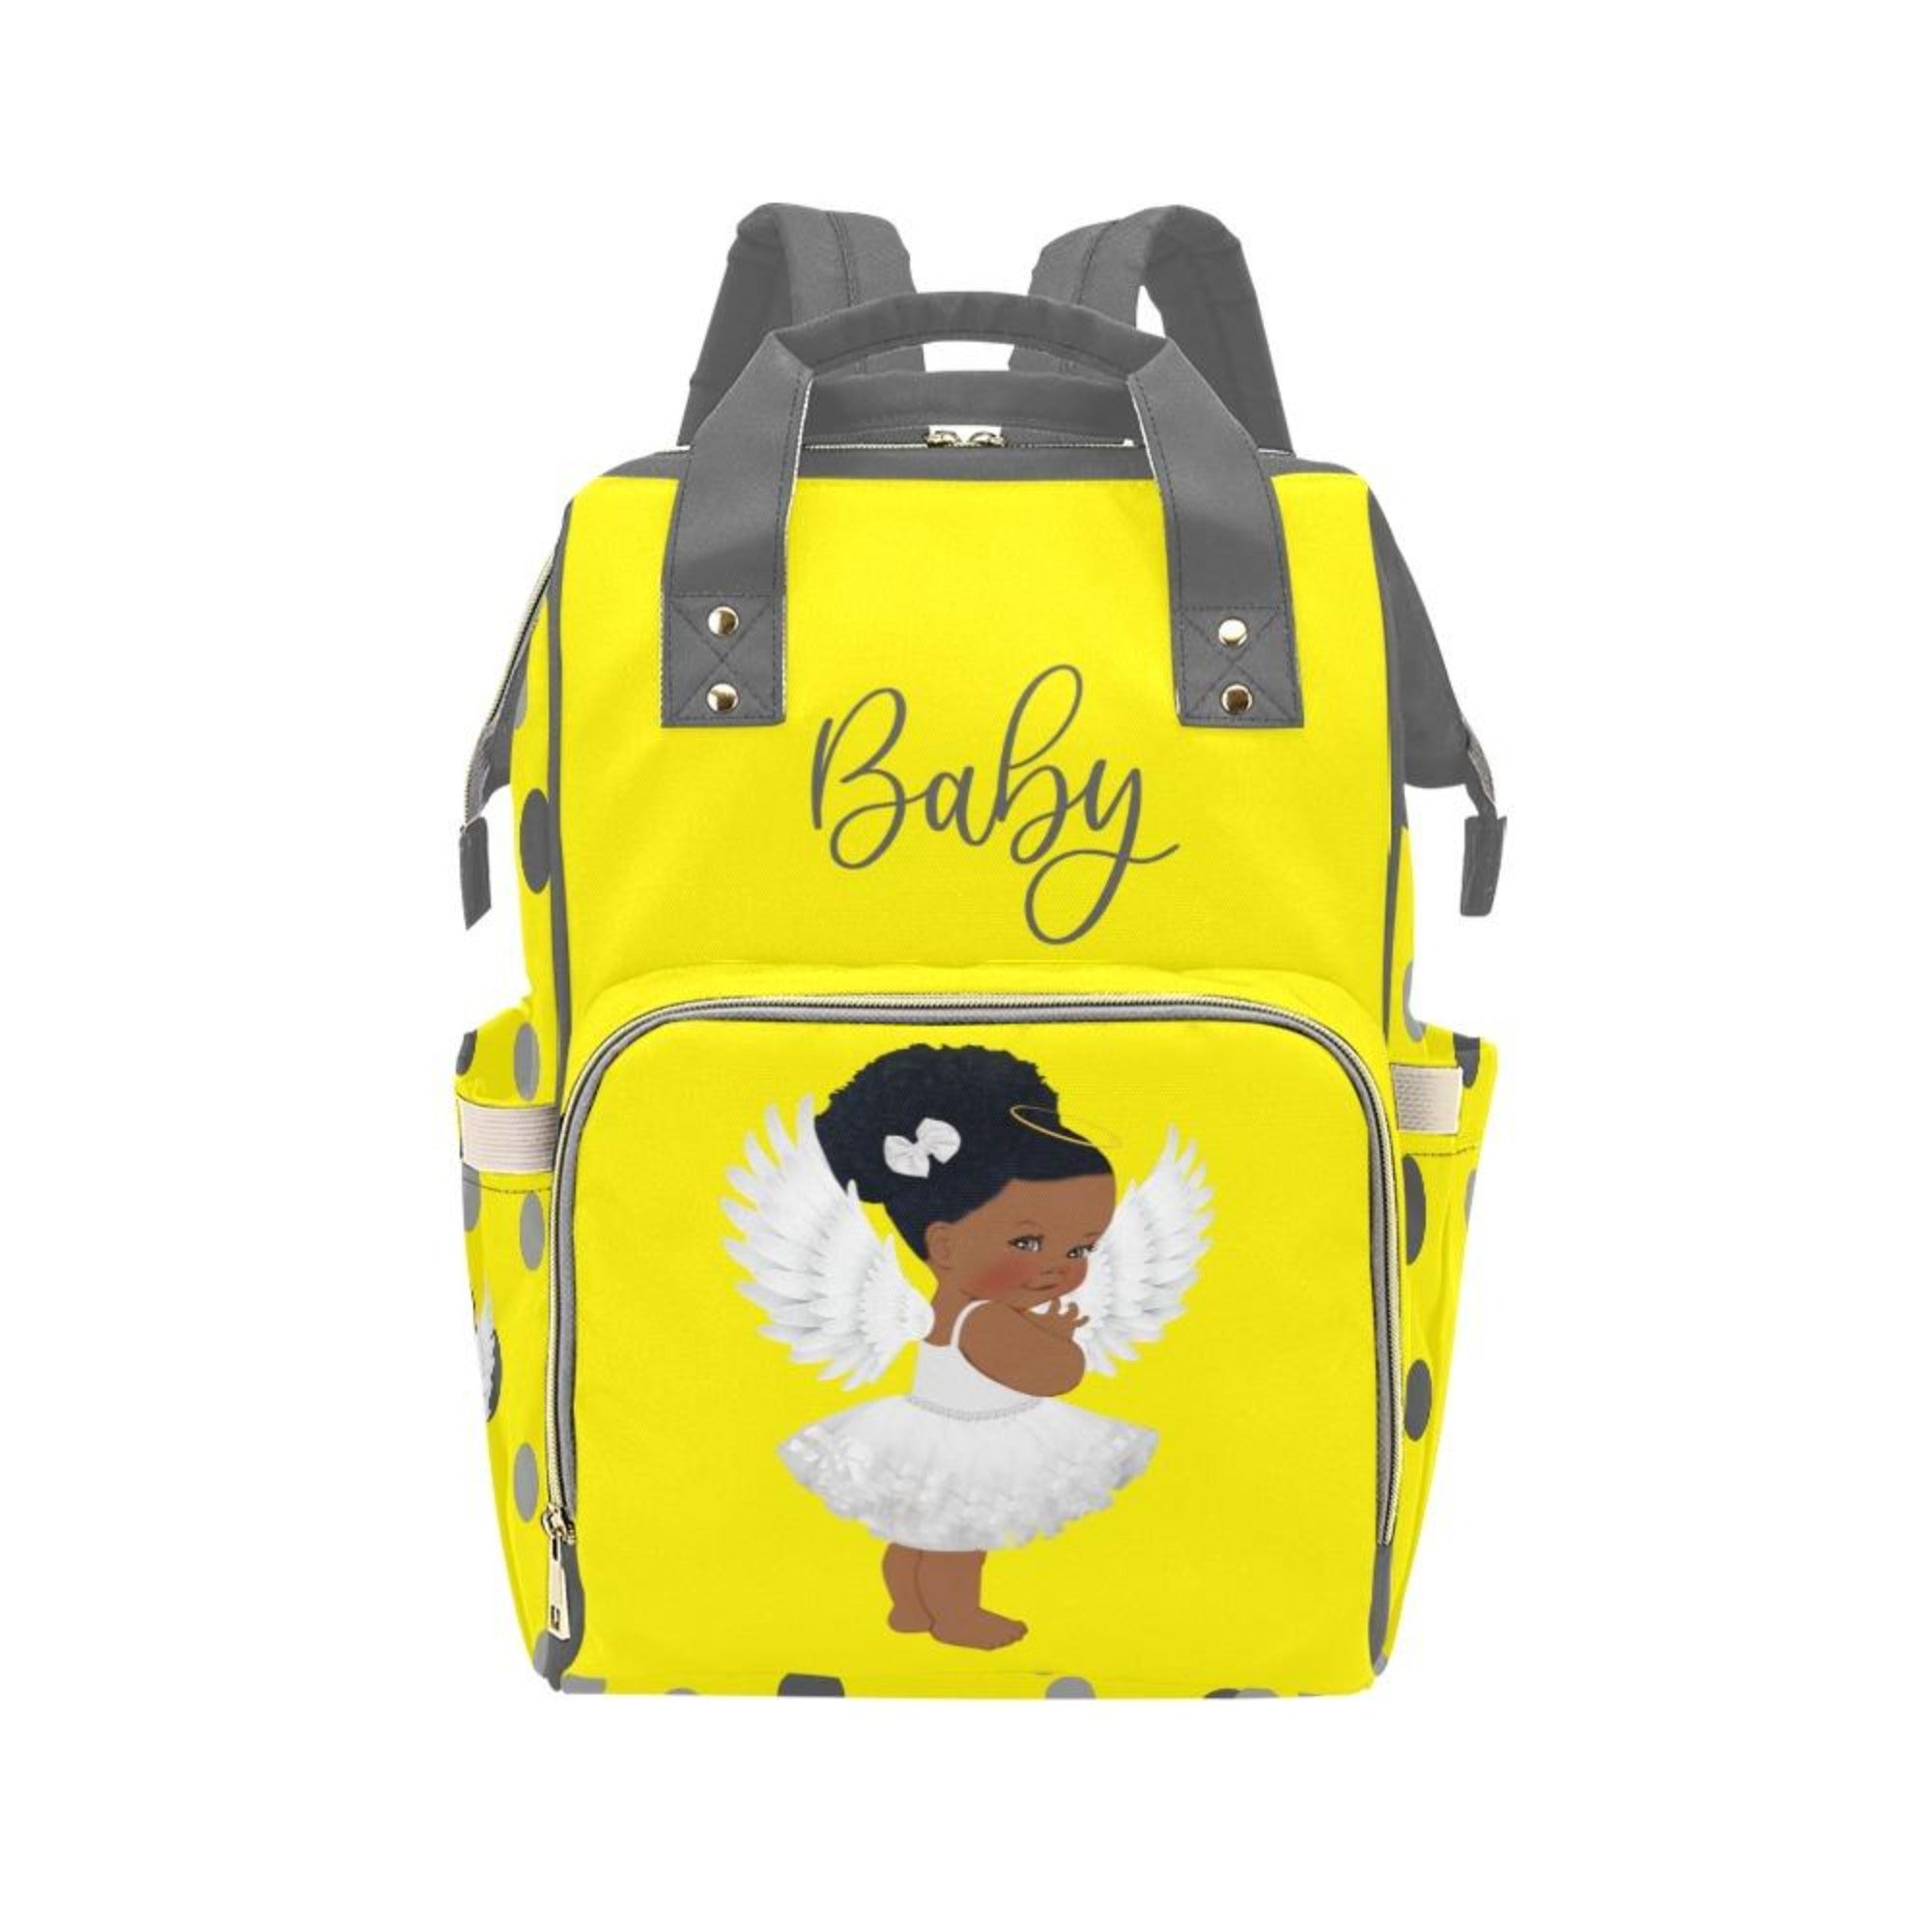 Designer Diaper Bag - African American Baby Girl Angel - Yellow Gray Polka Dots Multi-Function Backpack